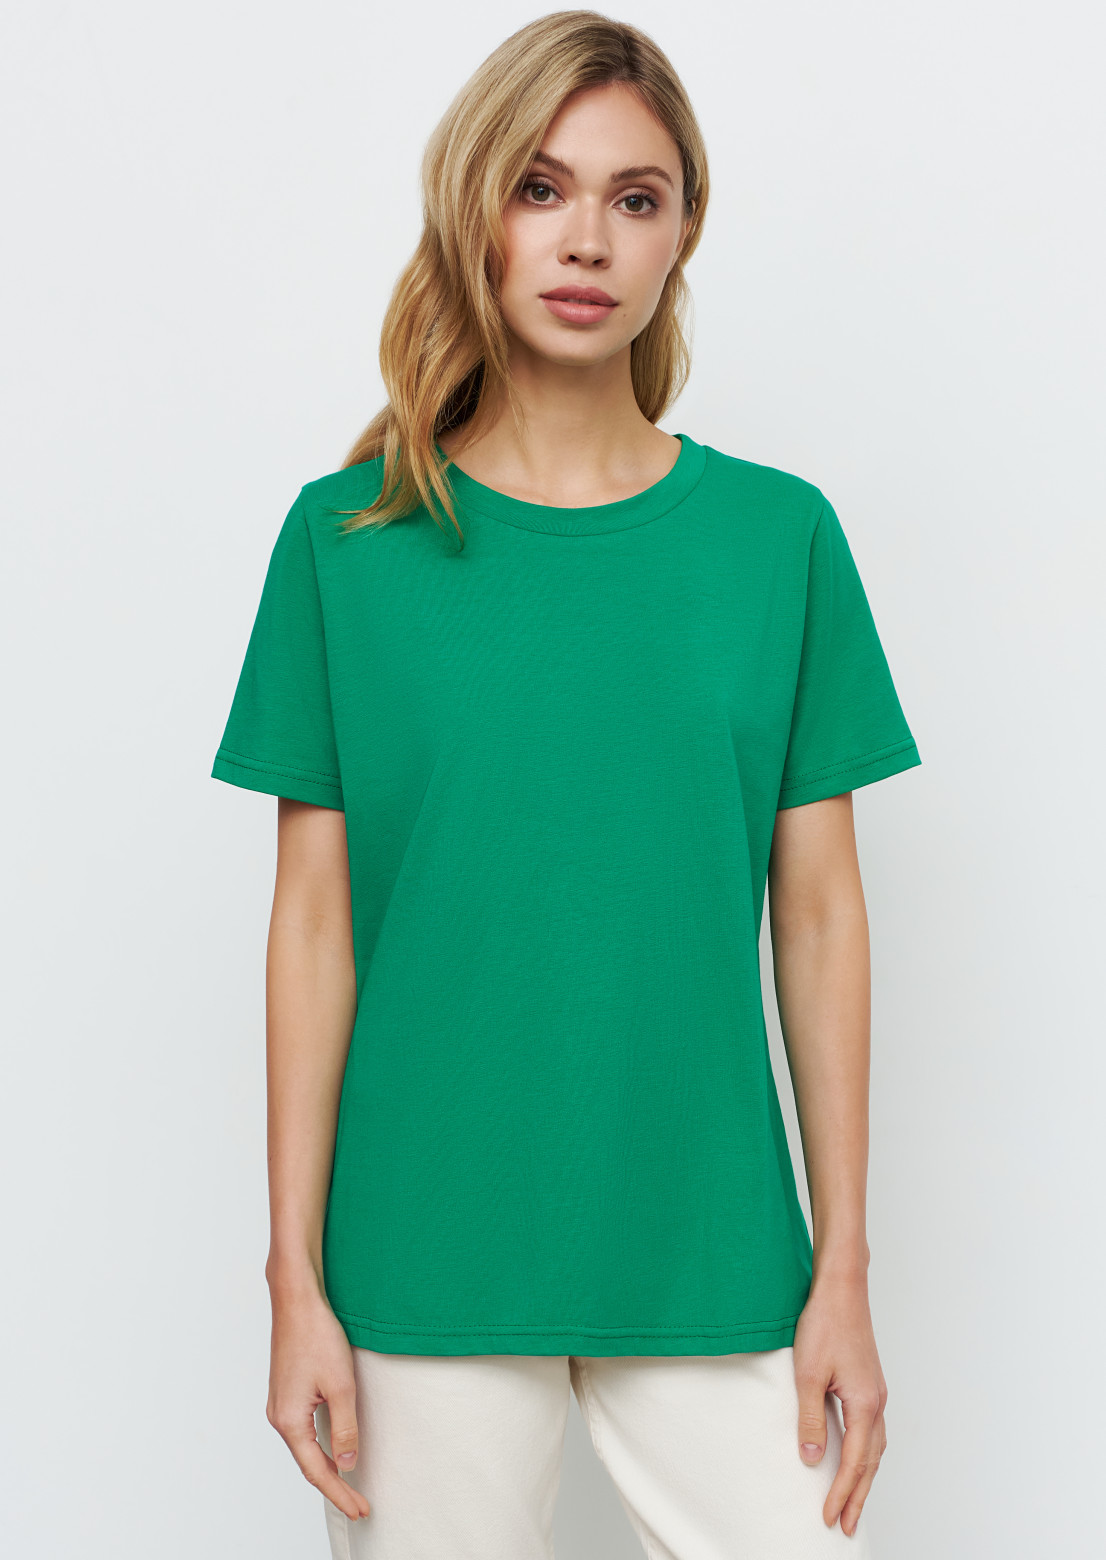 Green blank T-shirt